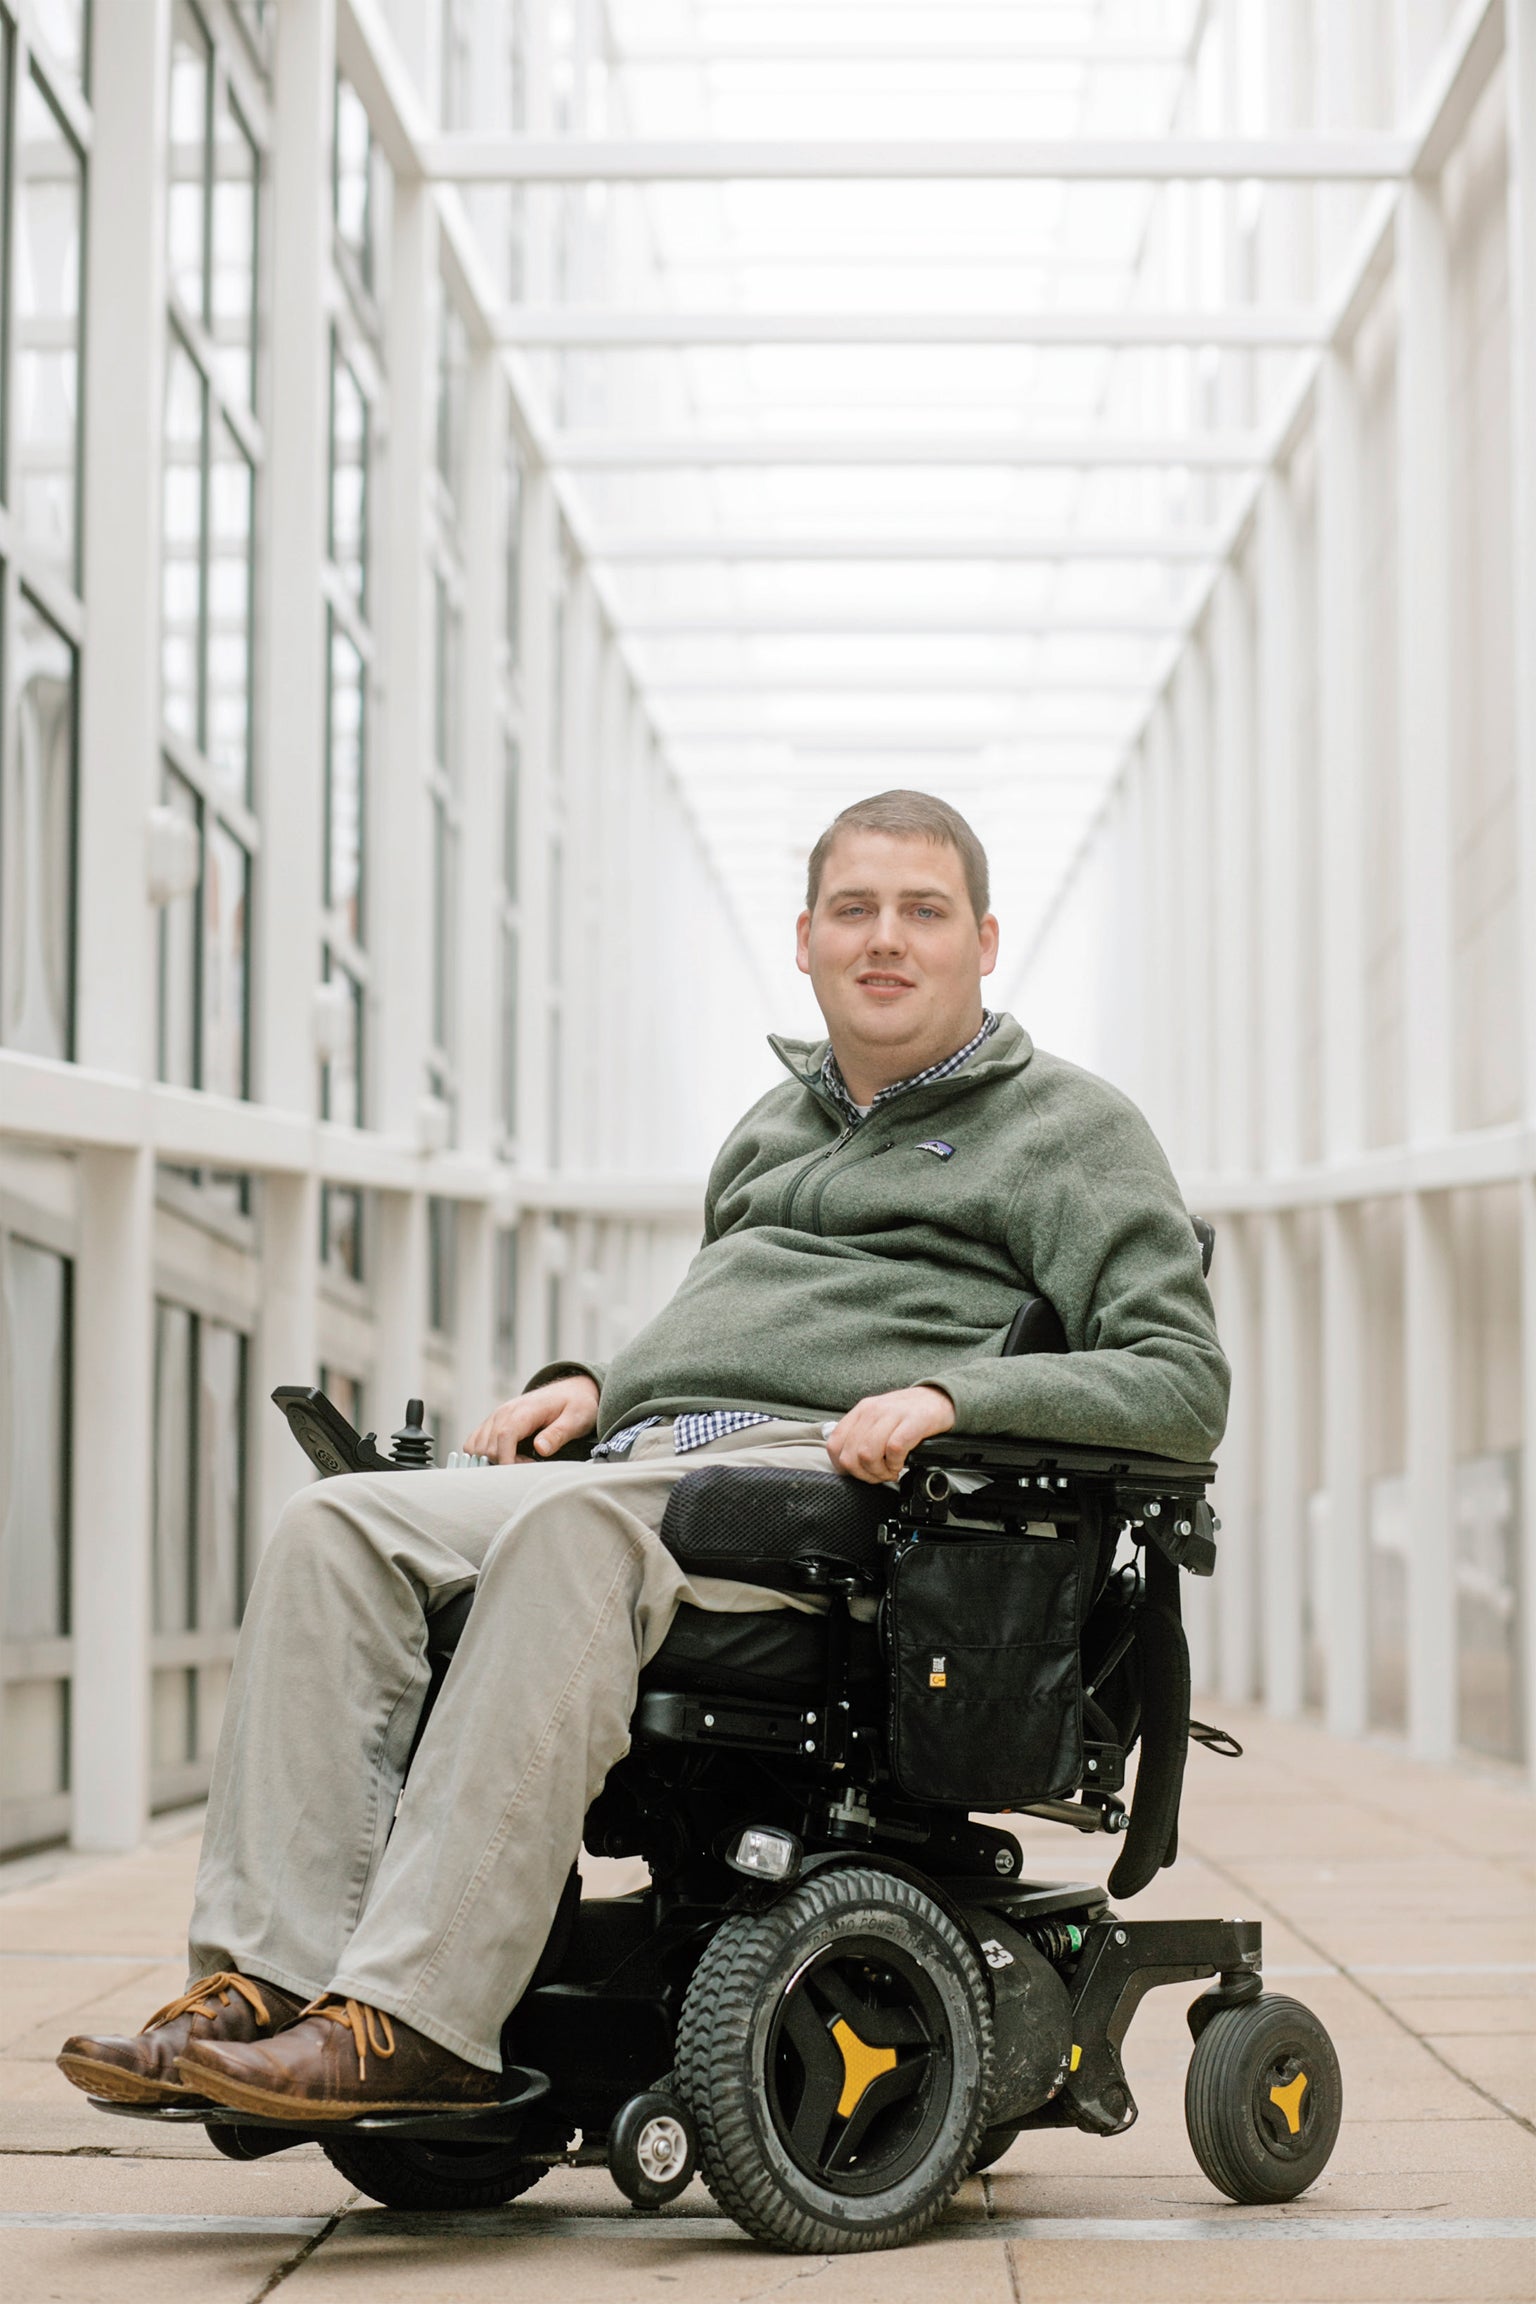 paralysis patient in wheelchair